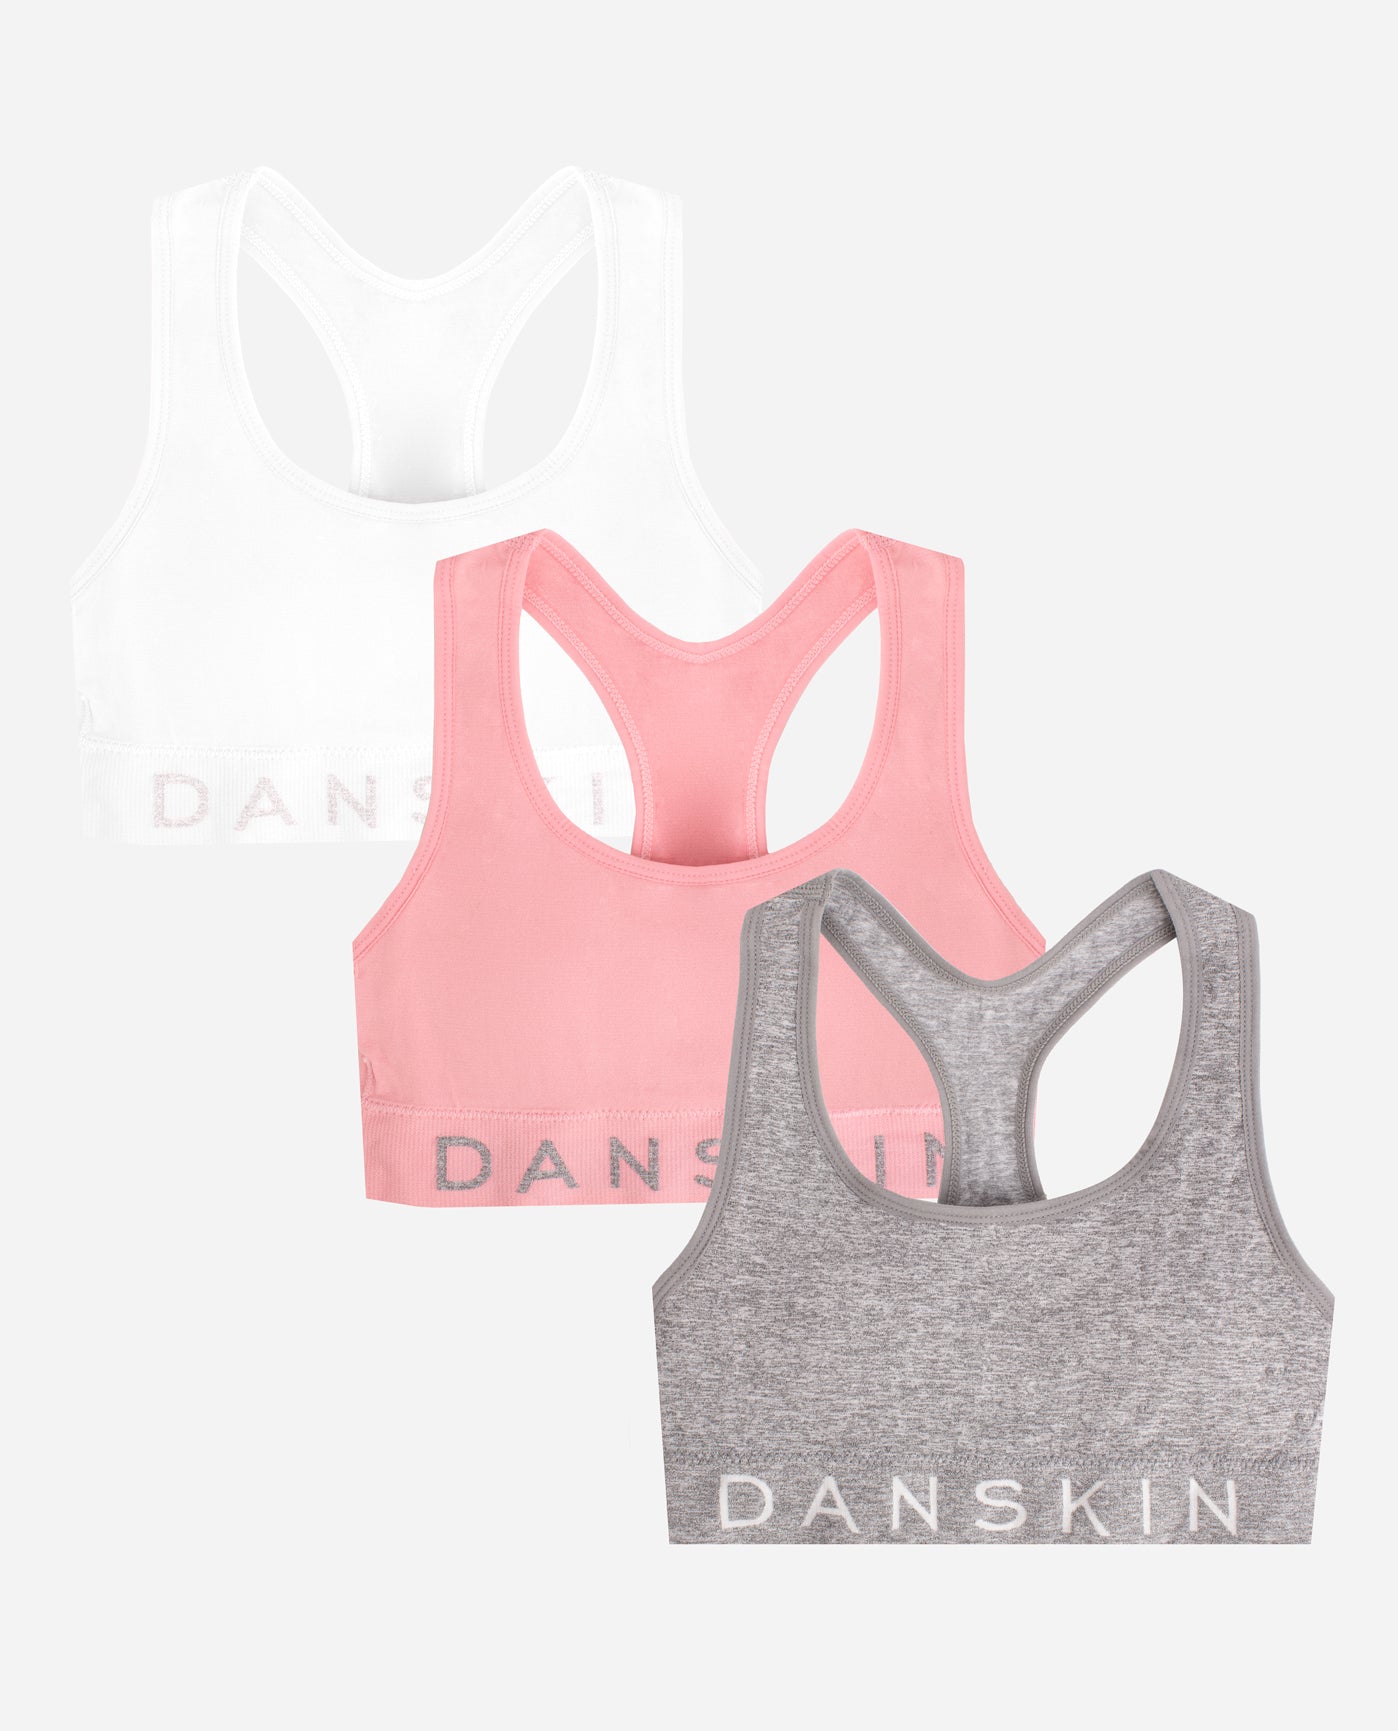 DKNY Women's Seamless Bralette, 2 Pack, Pink/Gray, Medium 